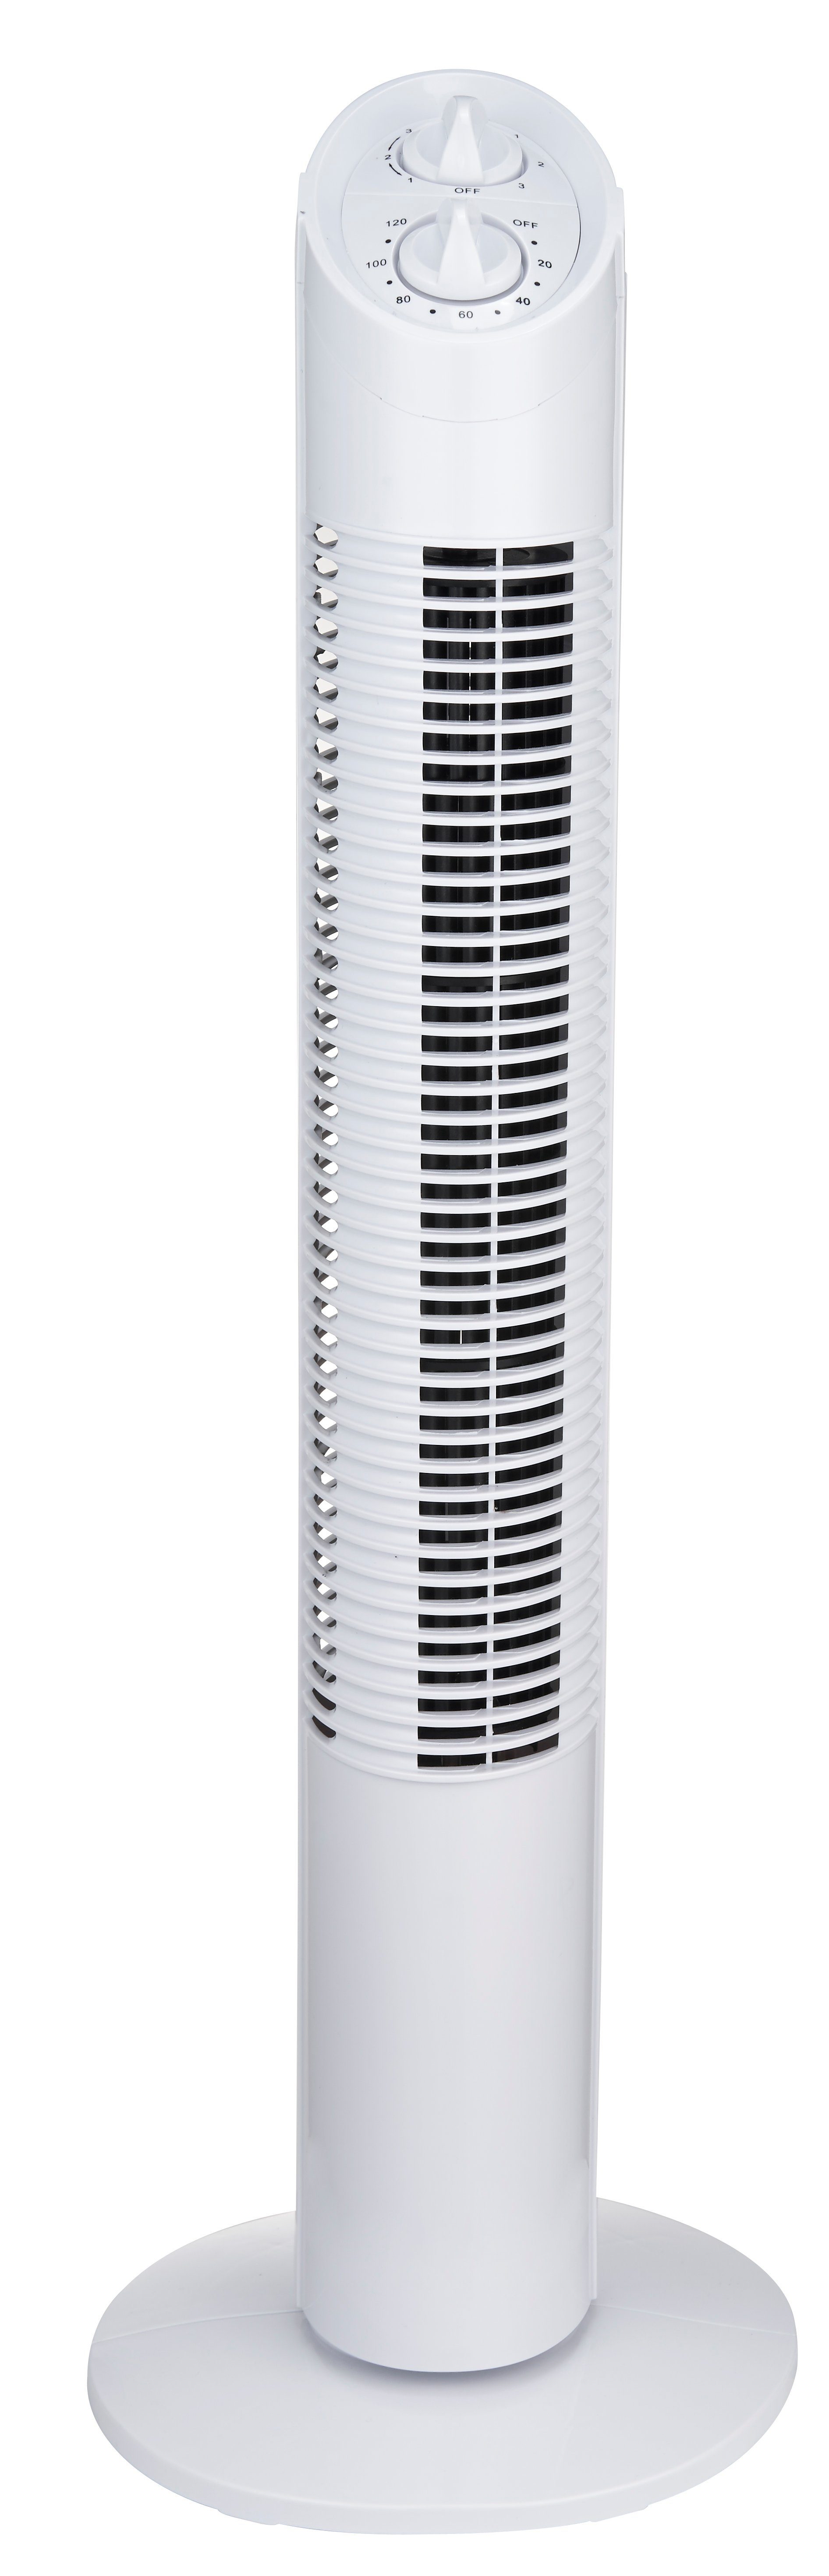 SALCO Turmventilator KLT-1081, oszillierend, 2-Std.-Timer, geräuscharm, 73cm hoch